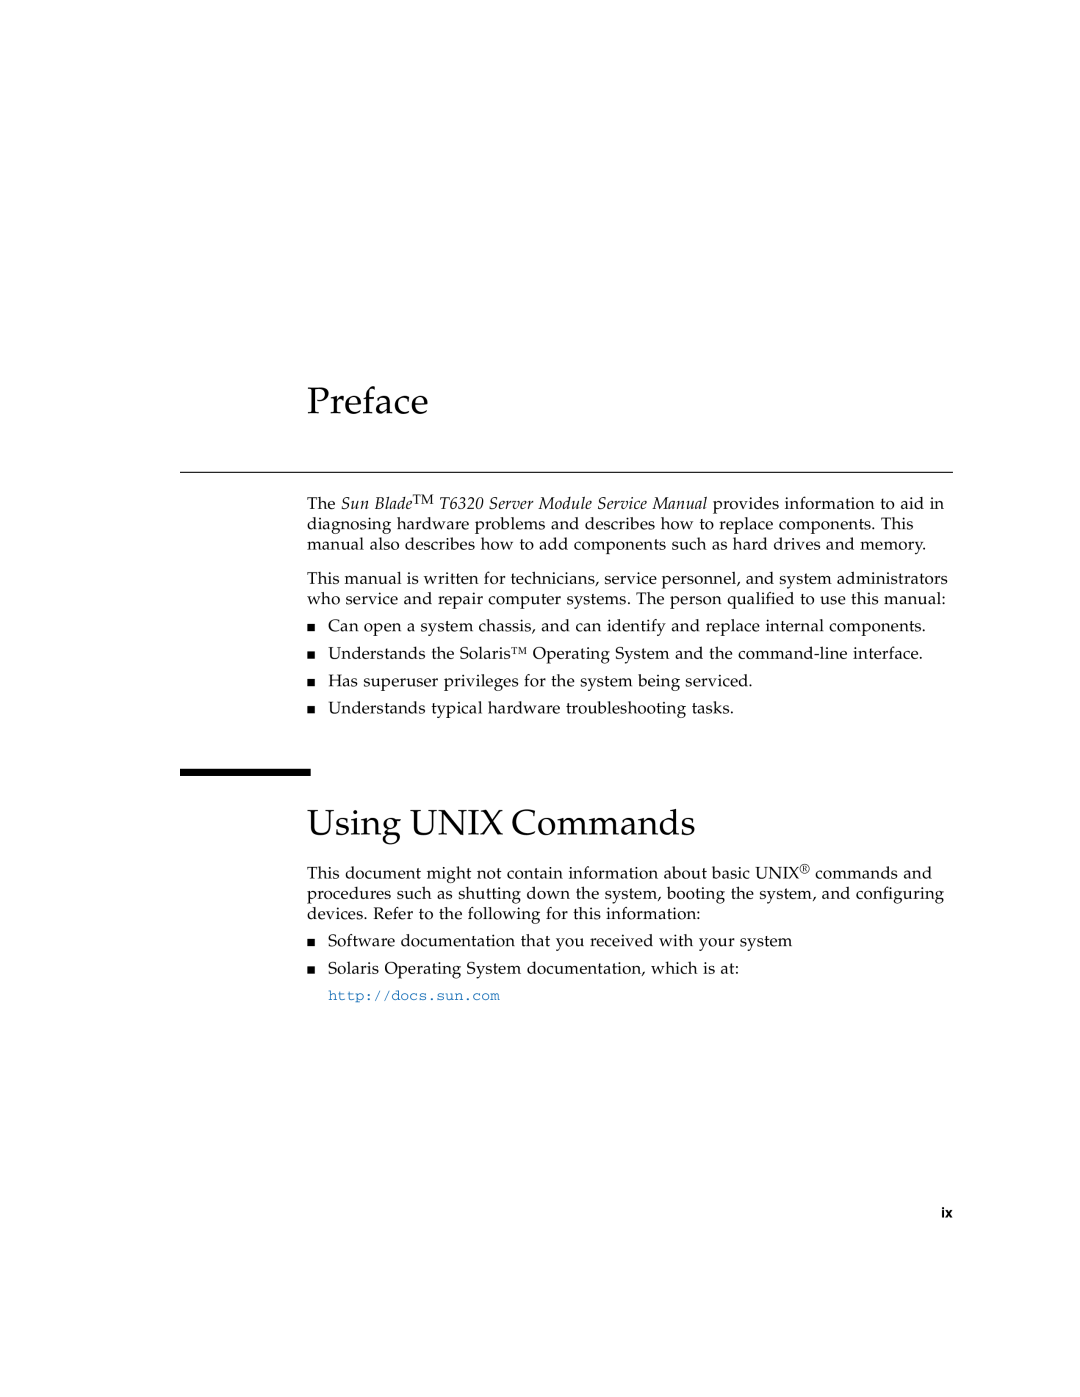 Sun Microsystems T6320 service manual Preface, Using UNIX Commands 